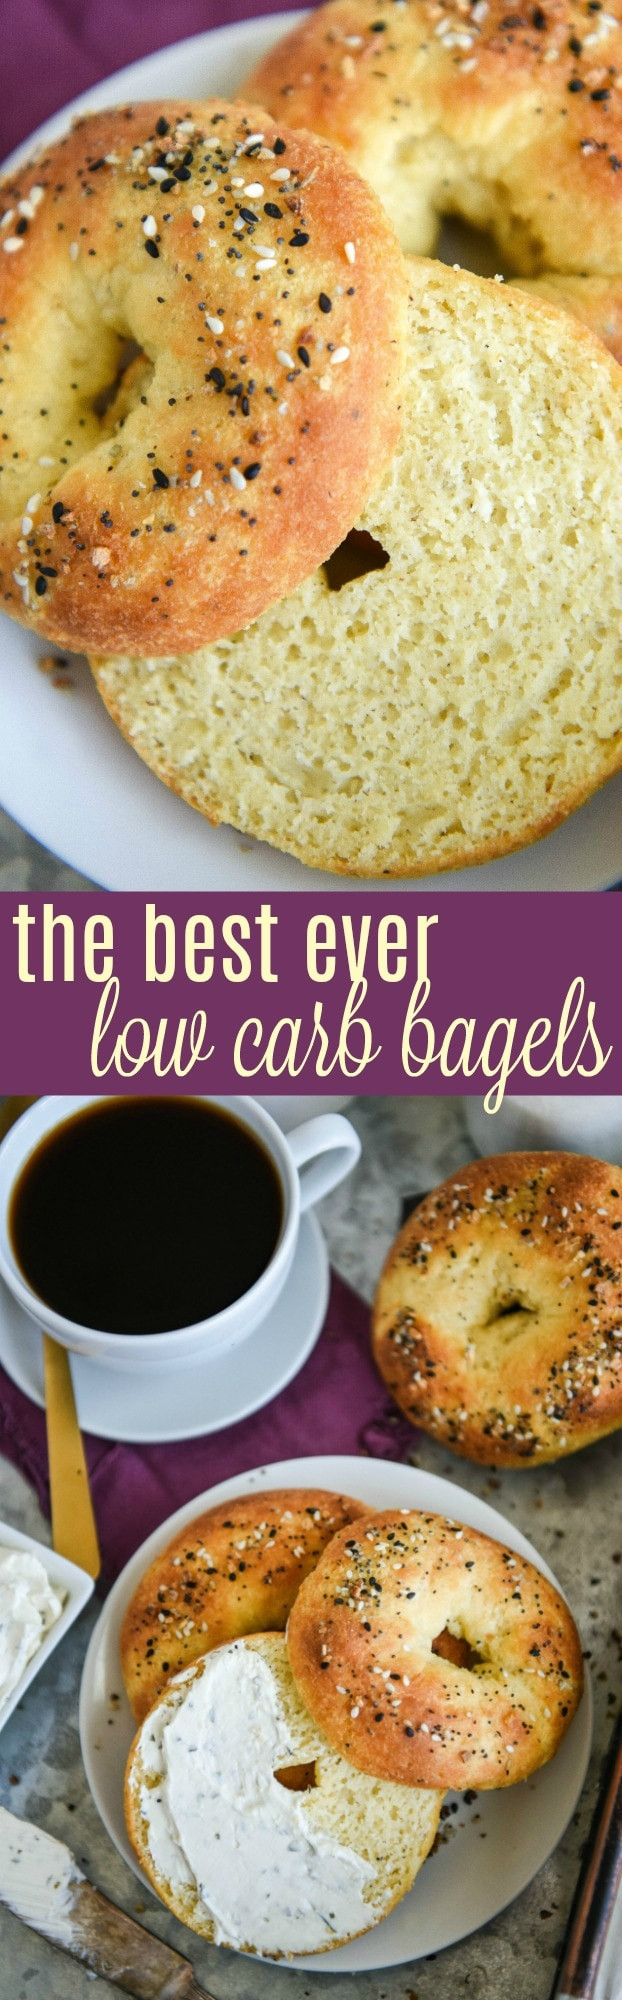 Low Carb Bagels
 The Best Low Carb Bagels